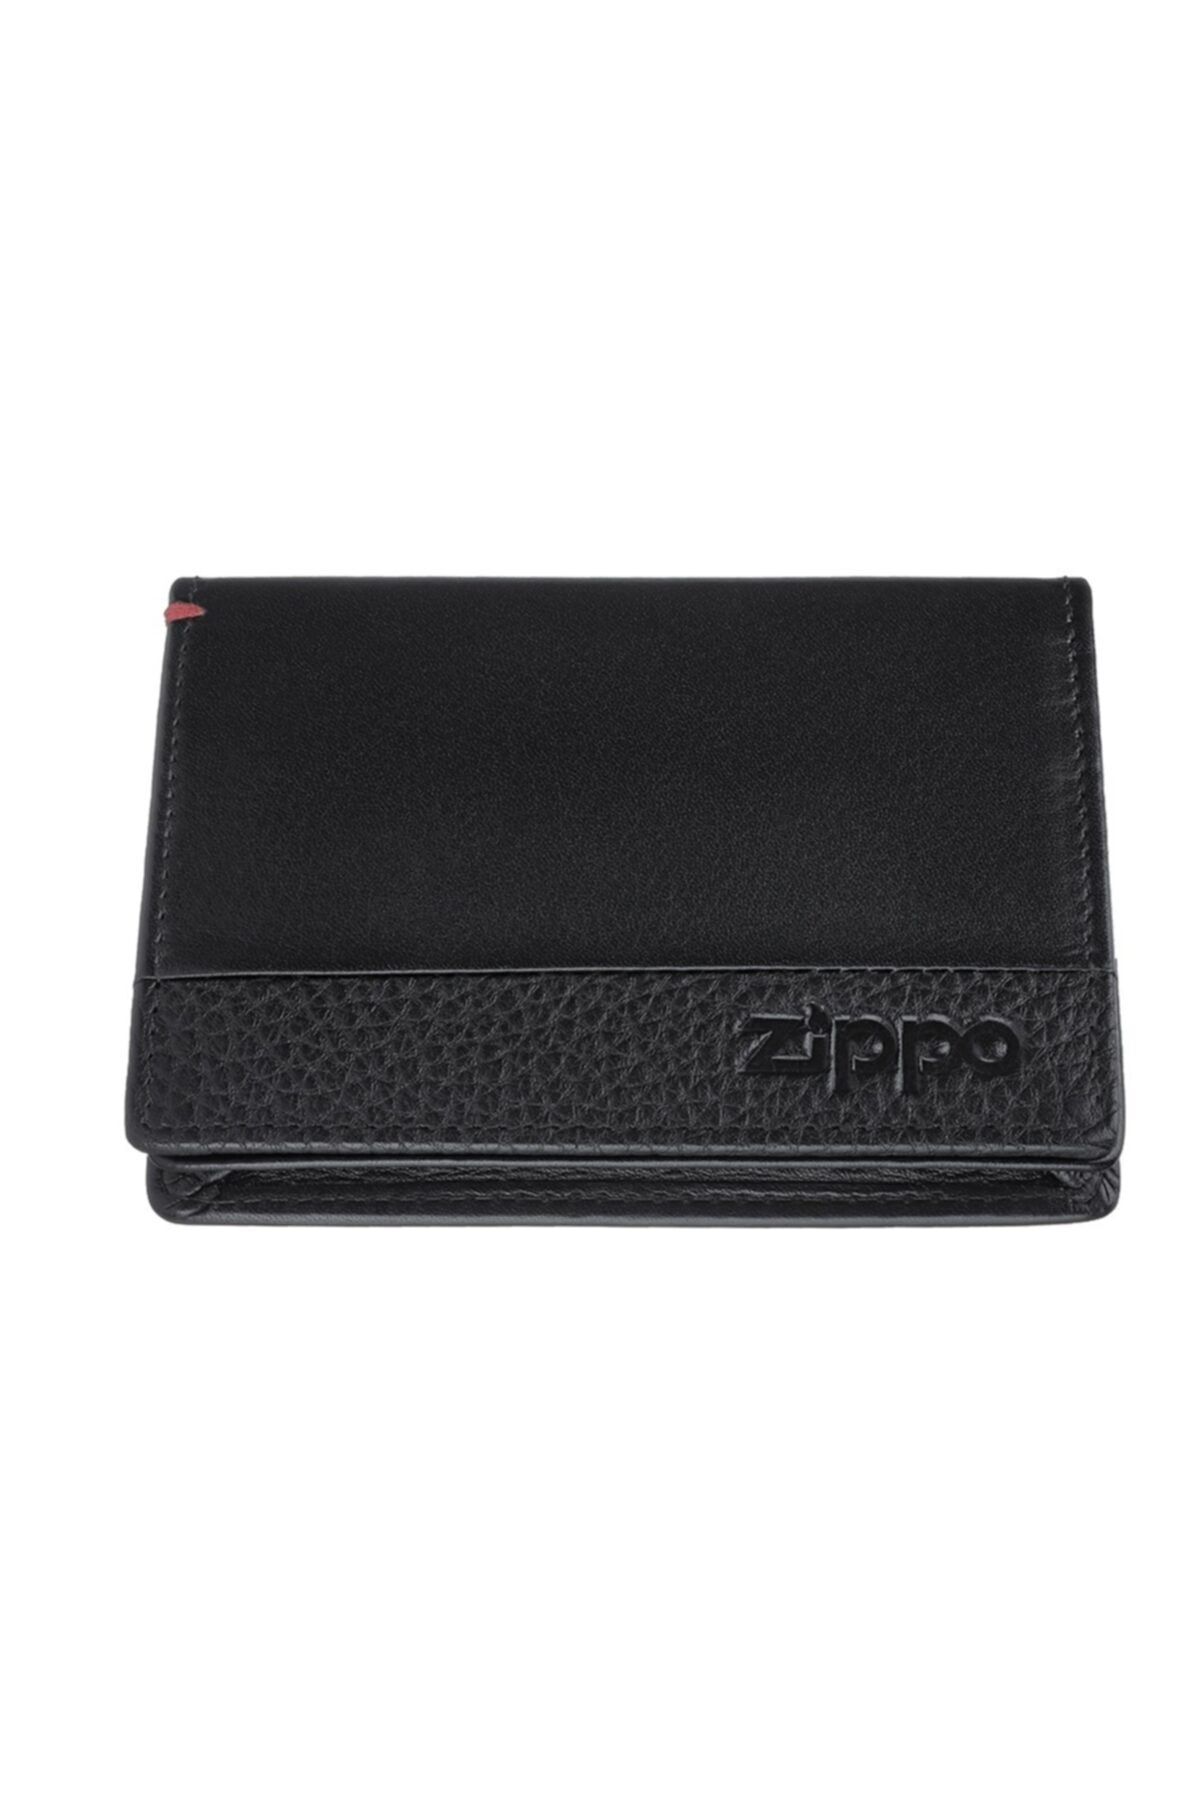 Zippo Nappa Business Card Wallet Black 2006024